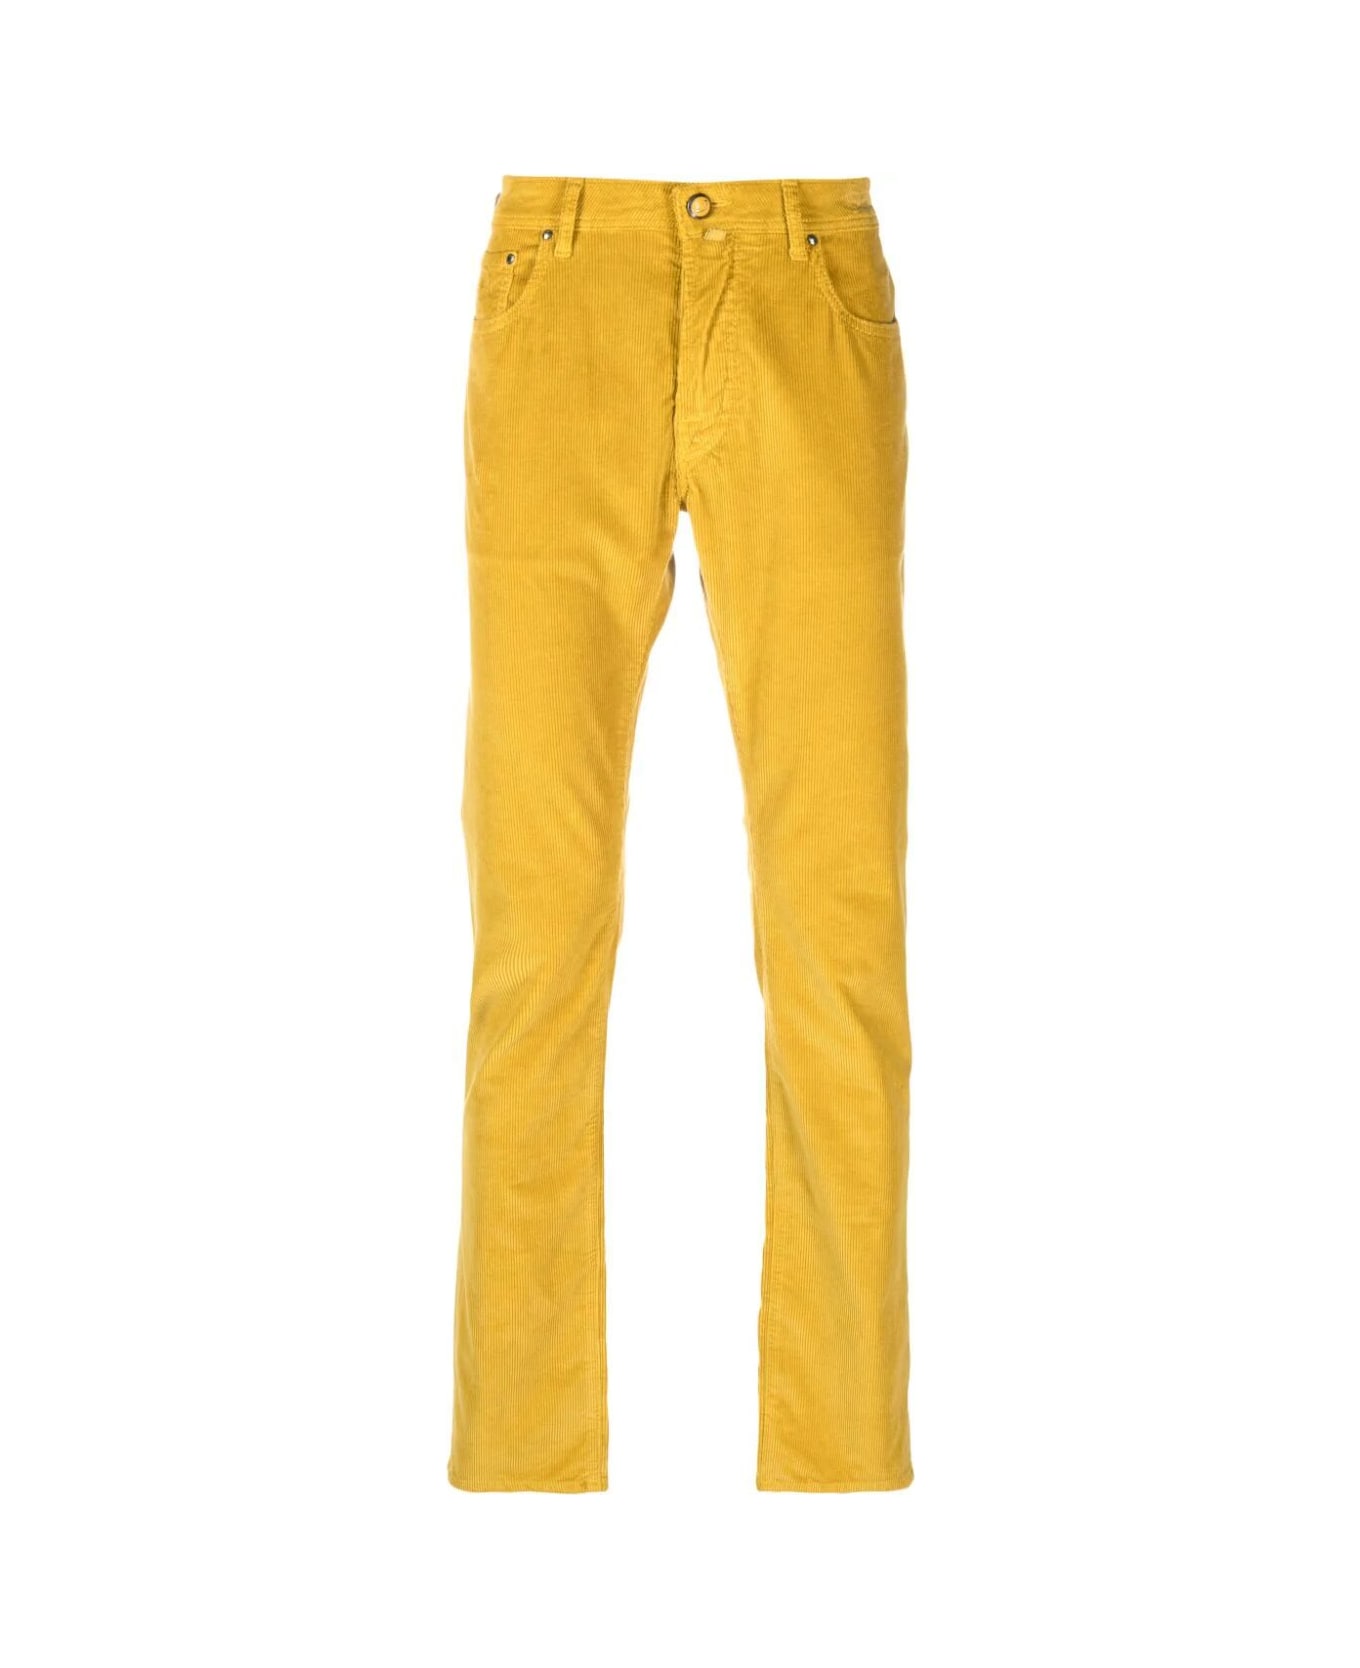 Jacob Cohen Bard Slim Fit Jeans - Golden Yellow